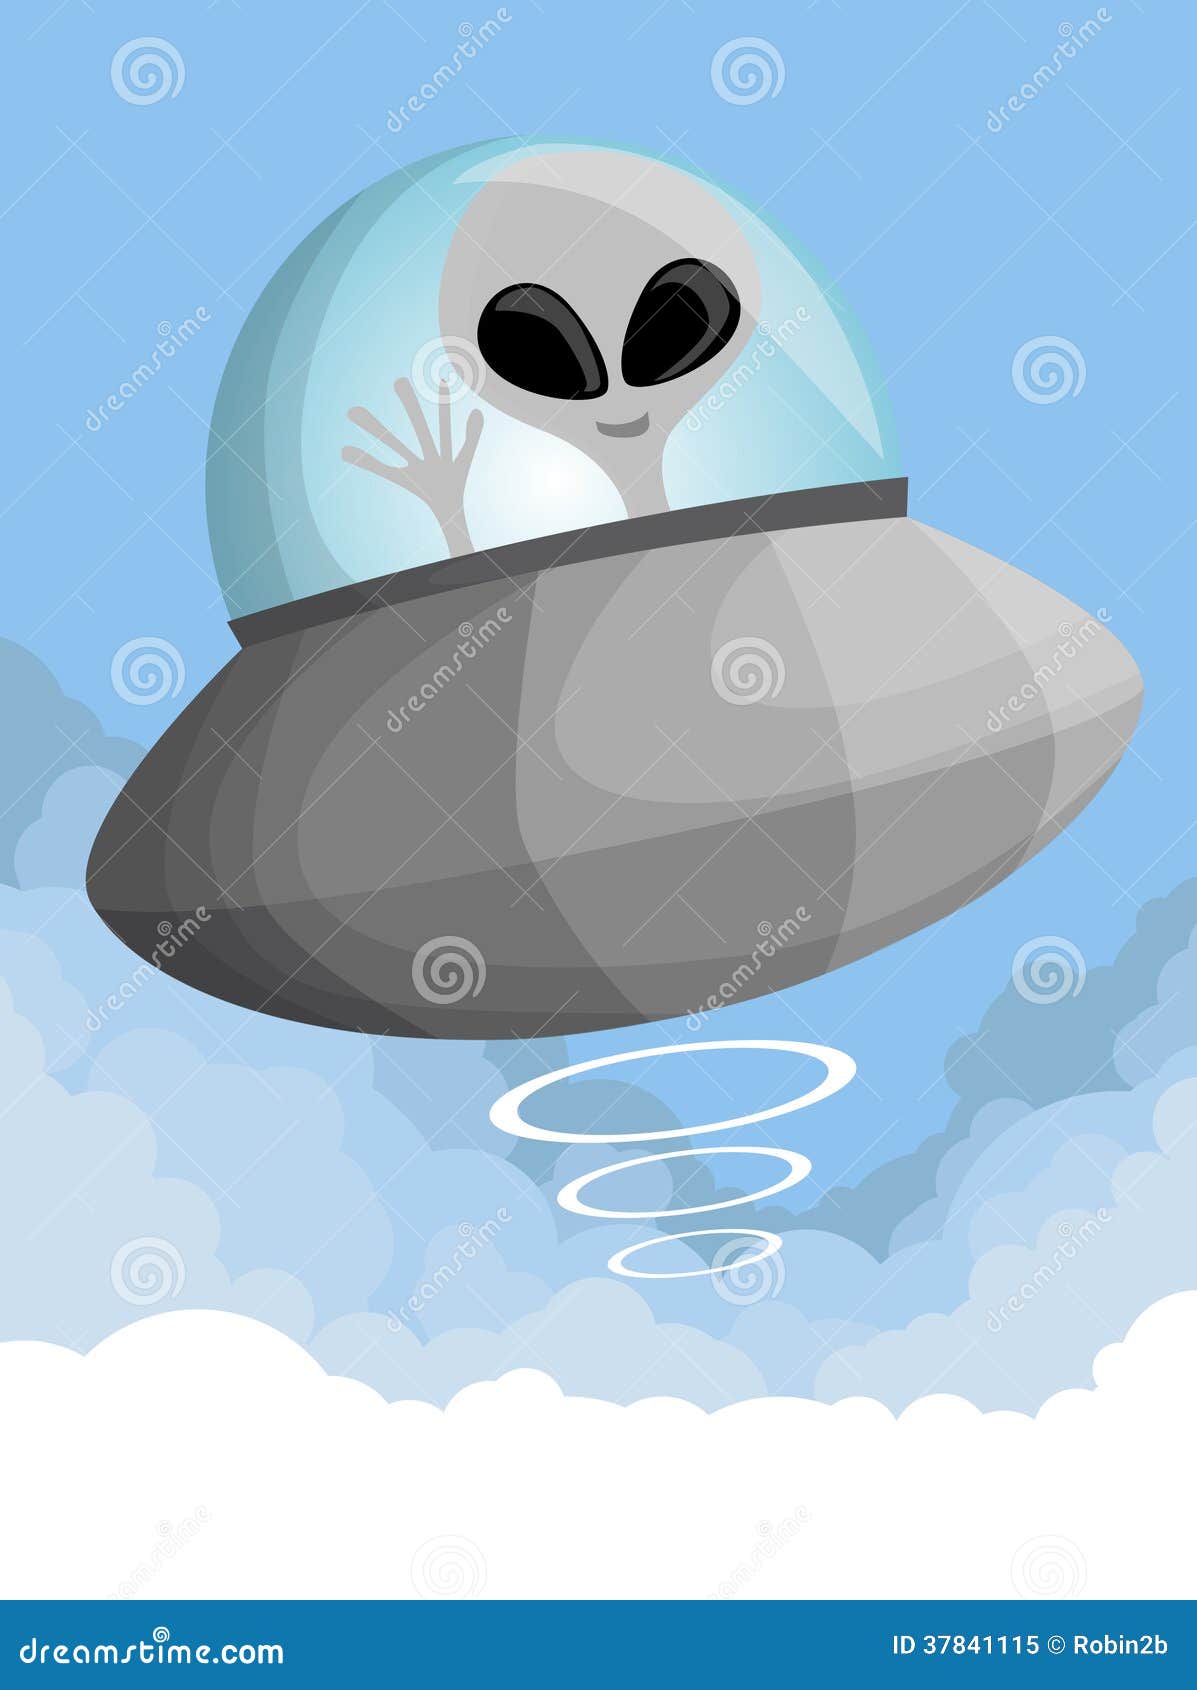 Cute Cartoon UFO In The Sky Stock Vector - Illustration of ...